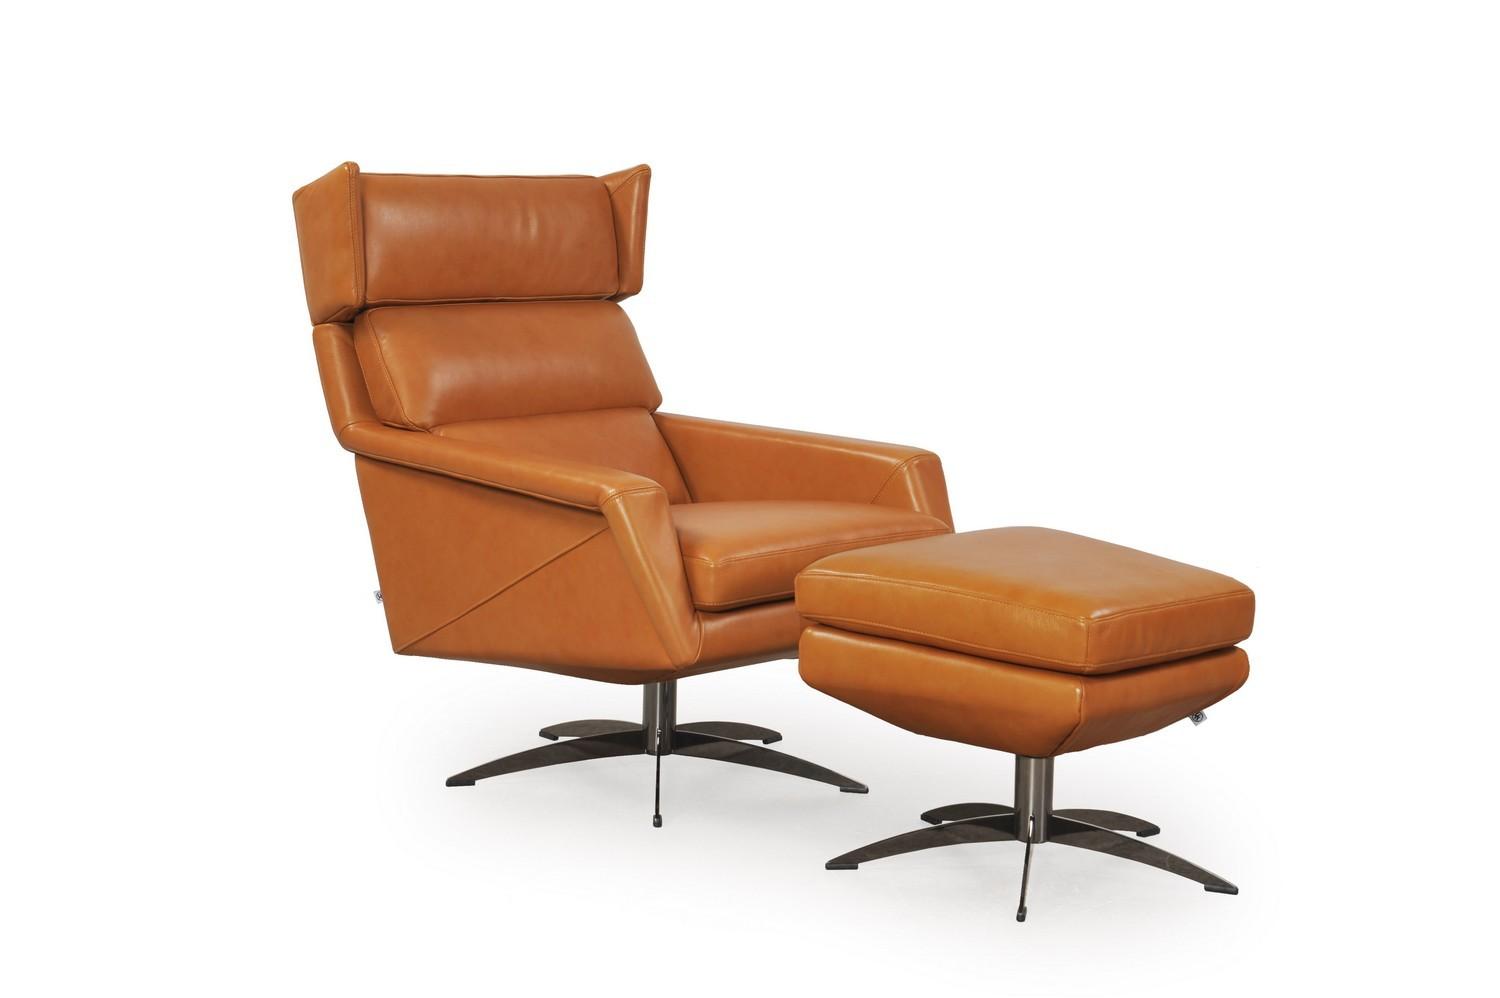 Contemporary, Modern Accent Chair & Ottoman 586 - Hansen 58606D1857-Set-2 in Tan Top grain leather